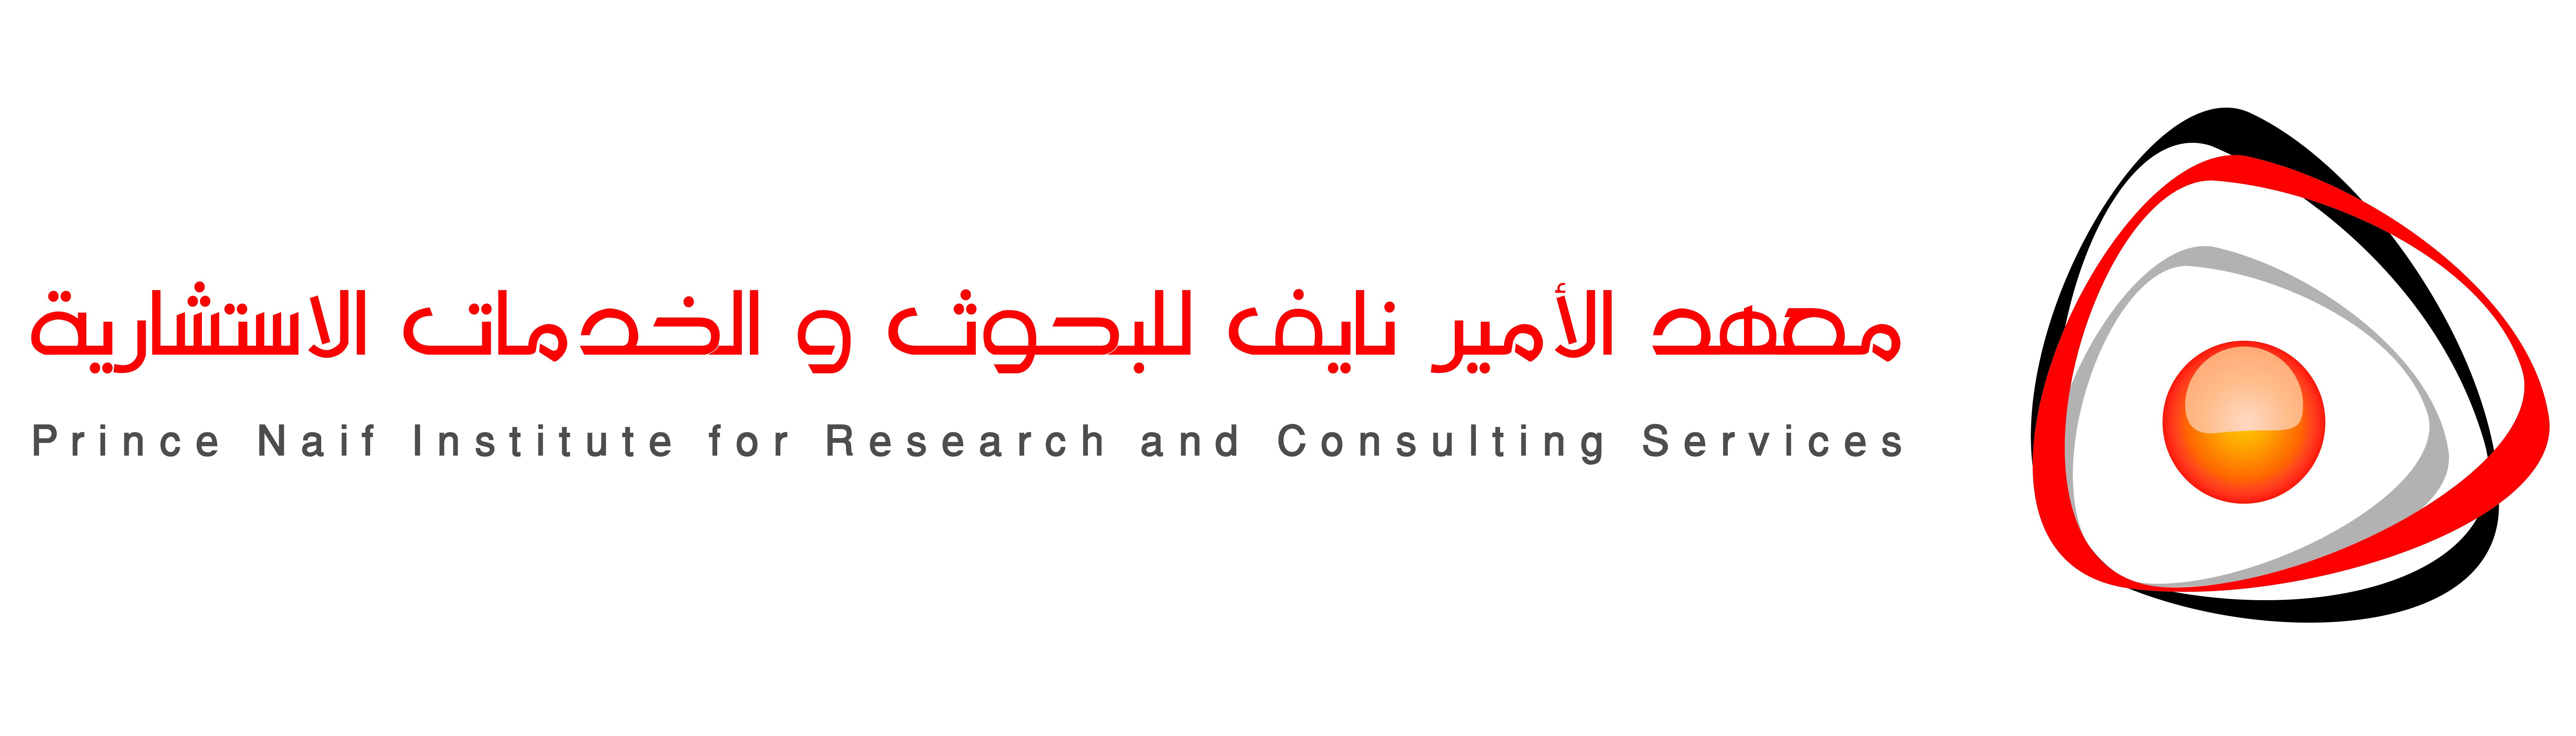 Prince Naif Institute logo.JPG